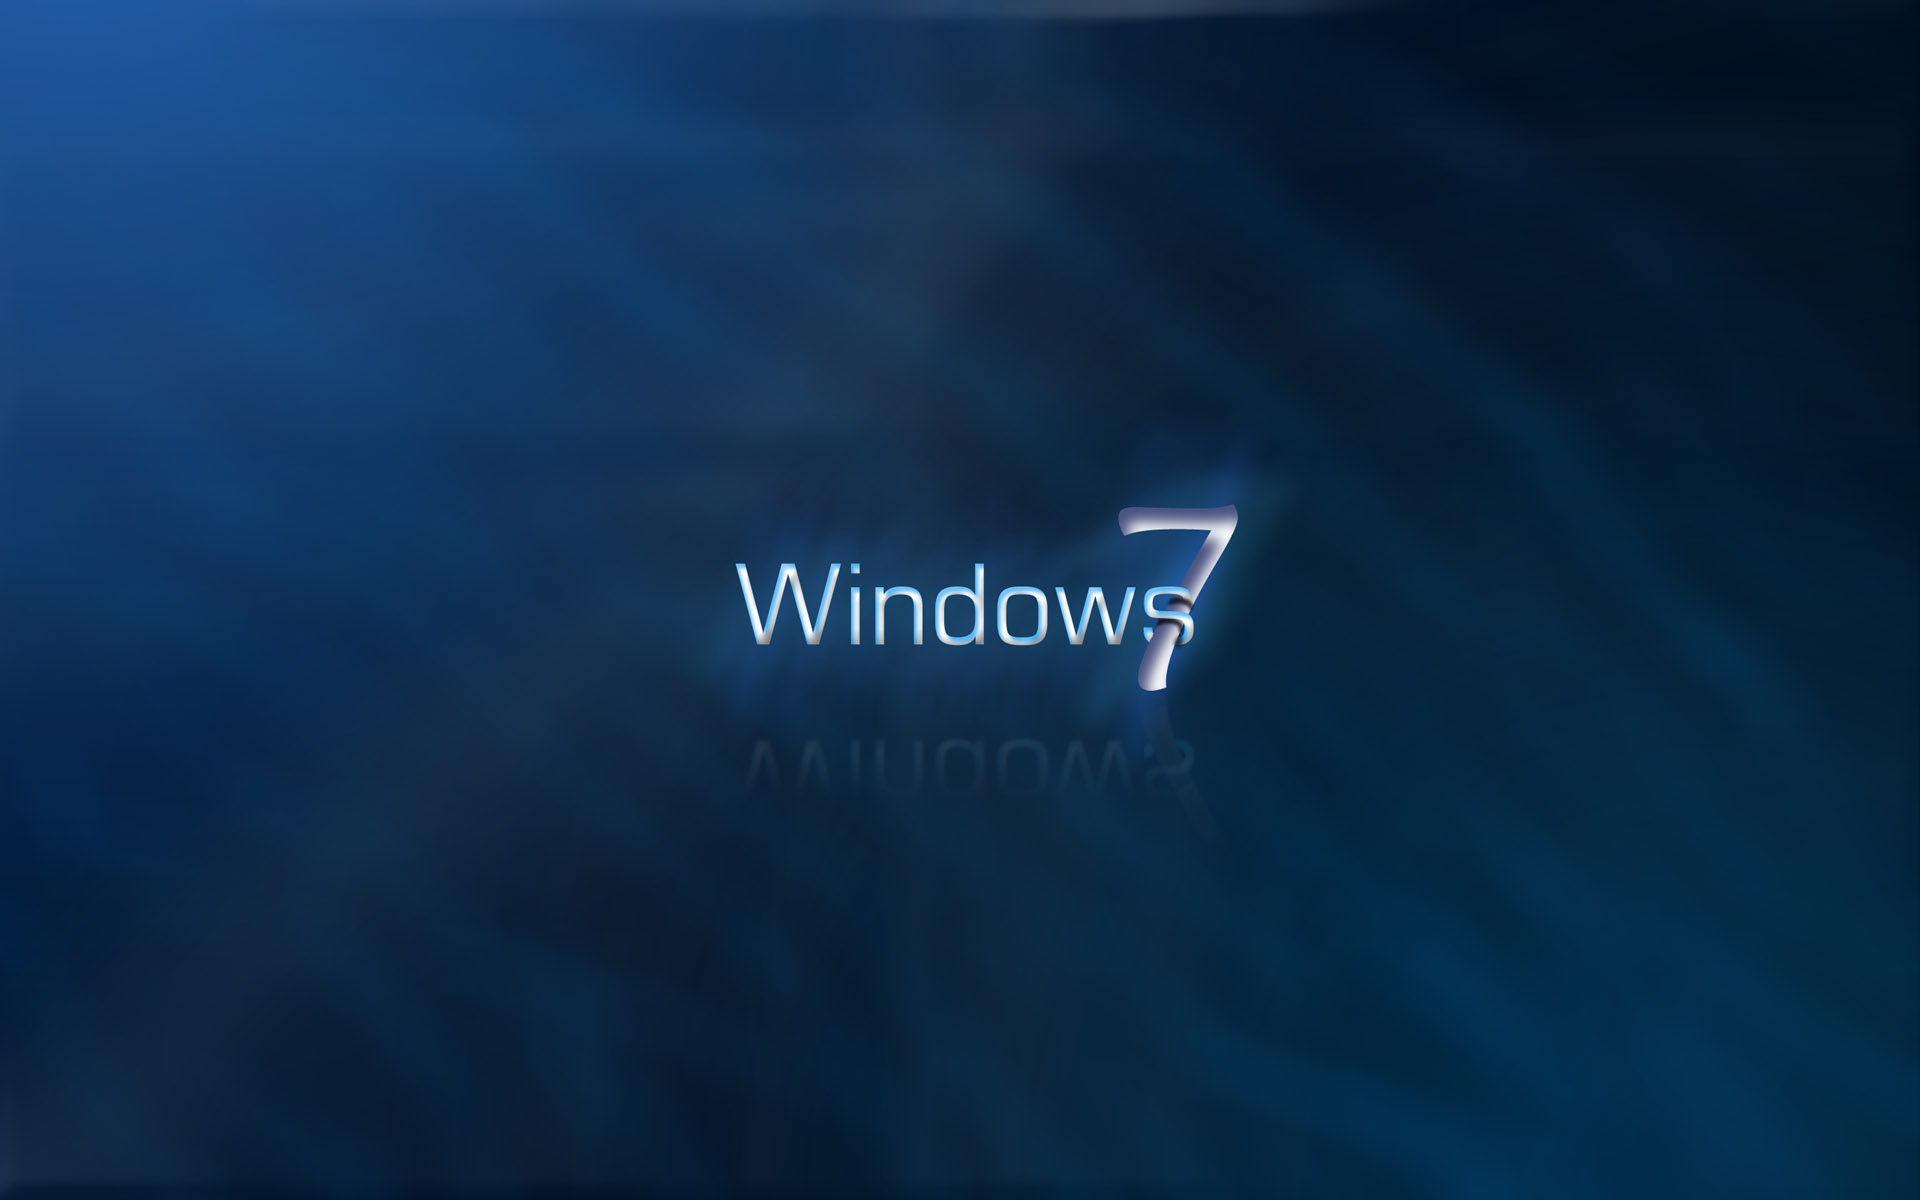 windows 7, microsoft, technology, logo, reflection, windows